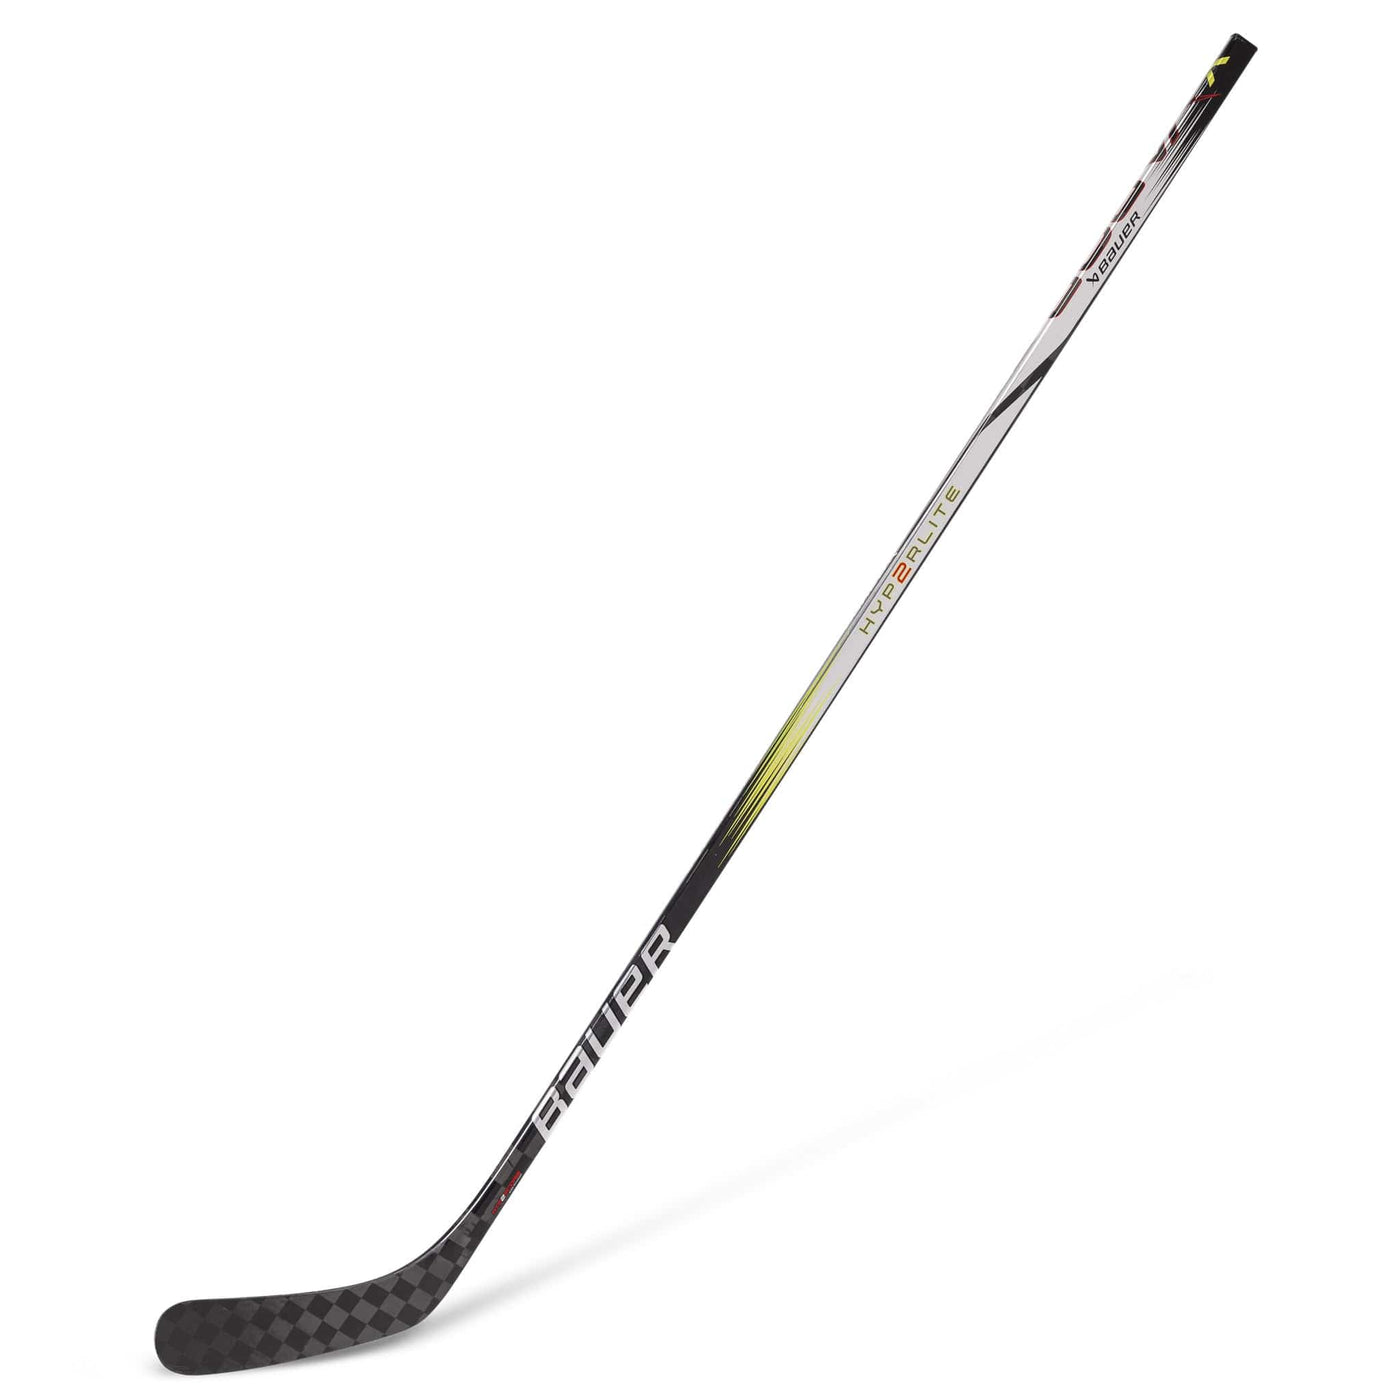 Bauer Vapor HyperLite2 Senior Hockey Stick - The Hockey Shop Source For Sports